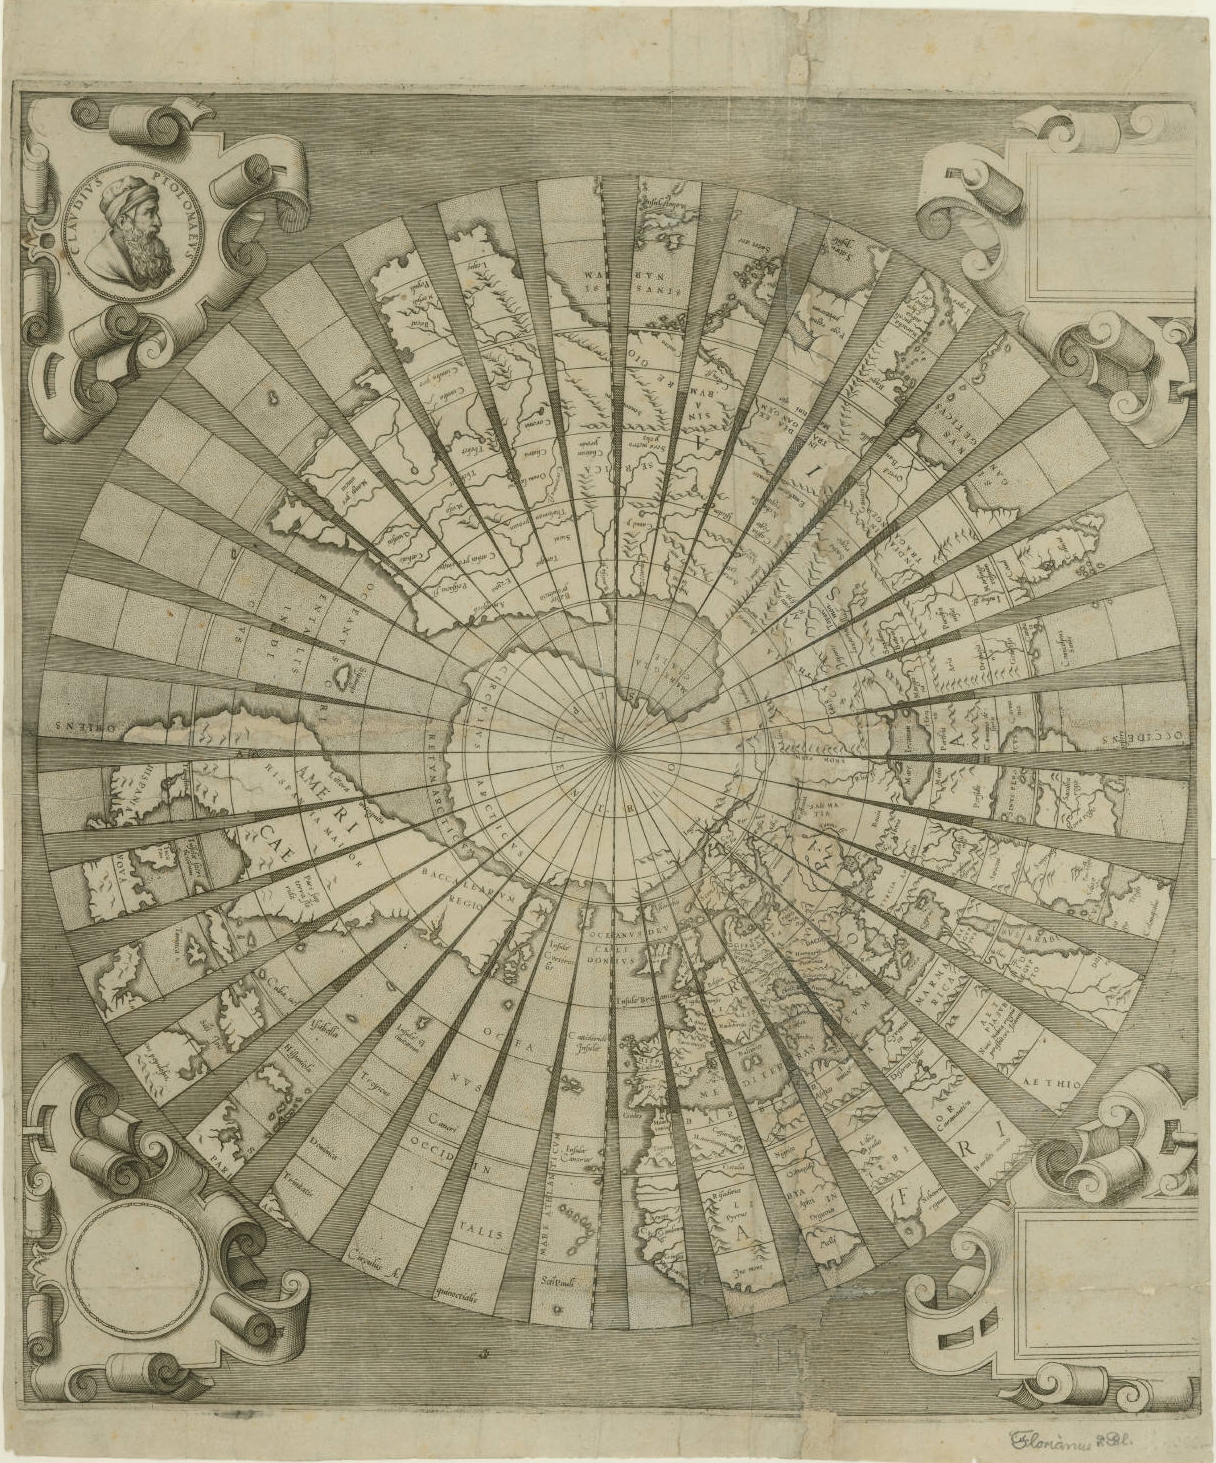 di-gore hemispheric world map by Florian, 1556